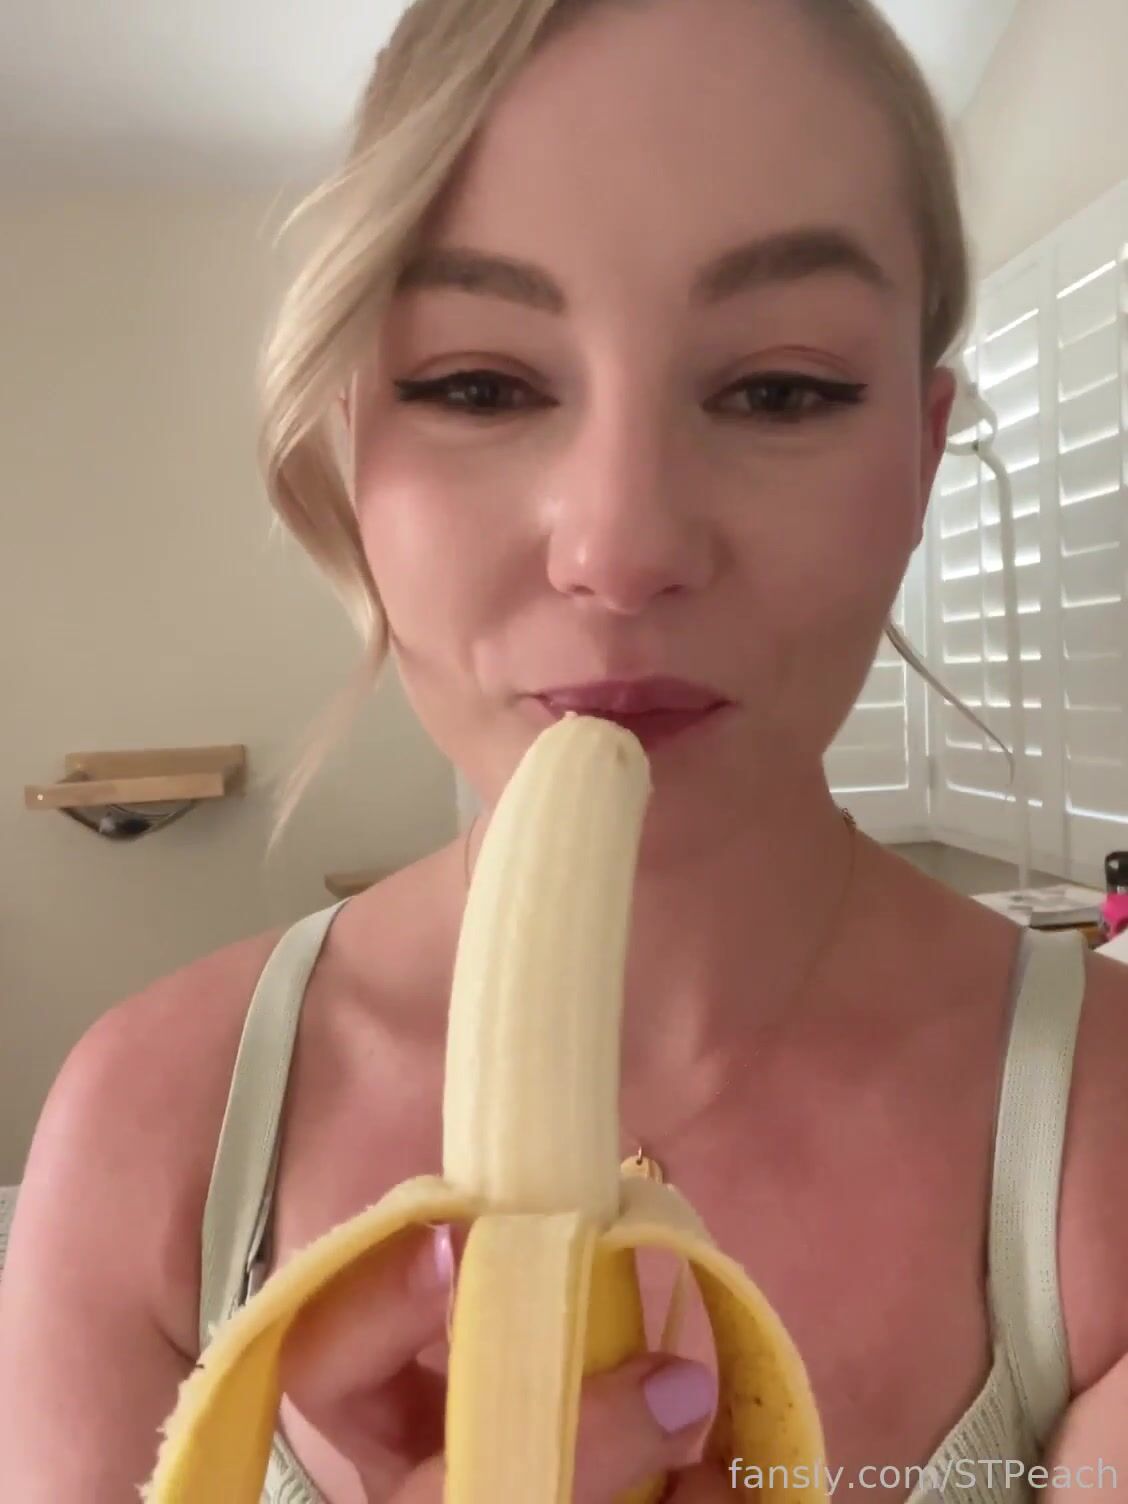 Stpeach sucking banana